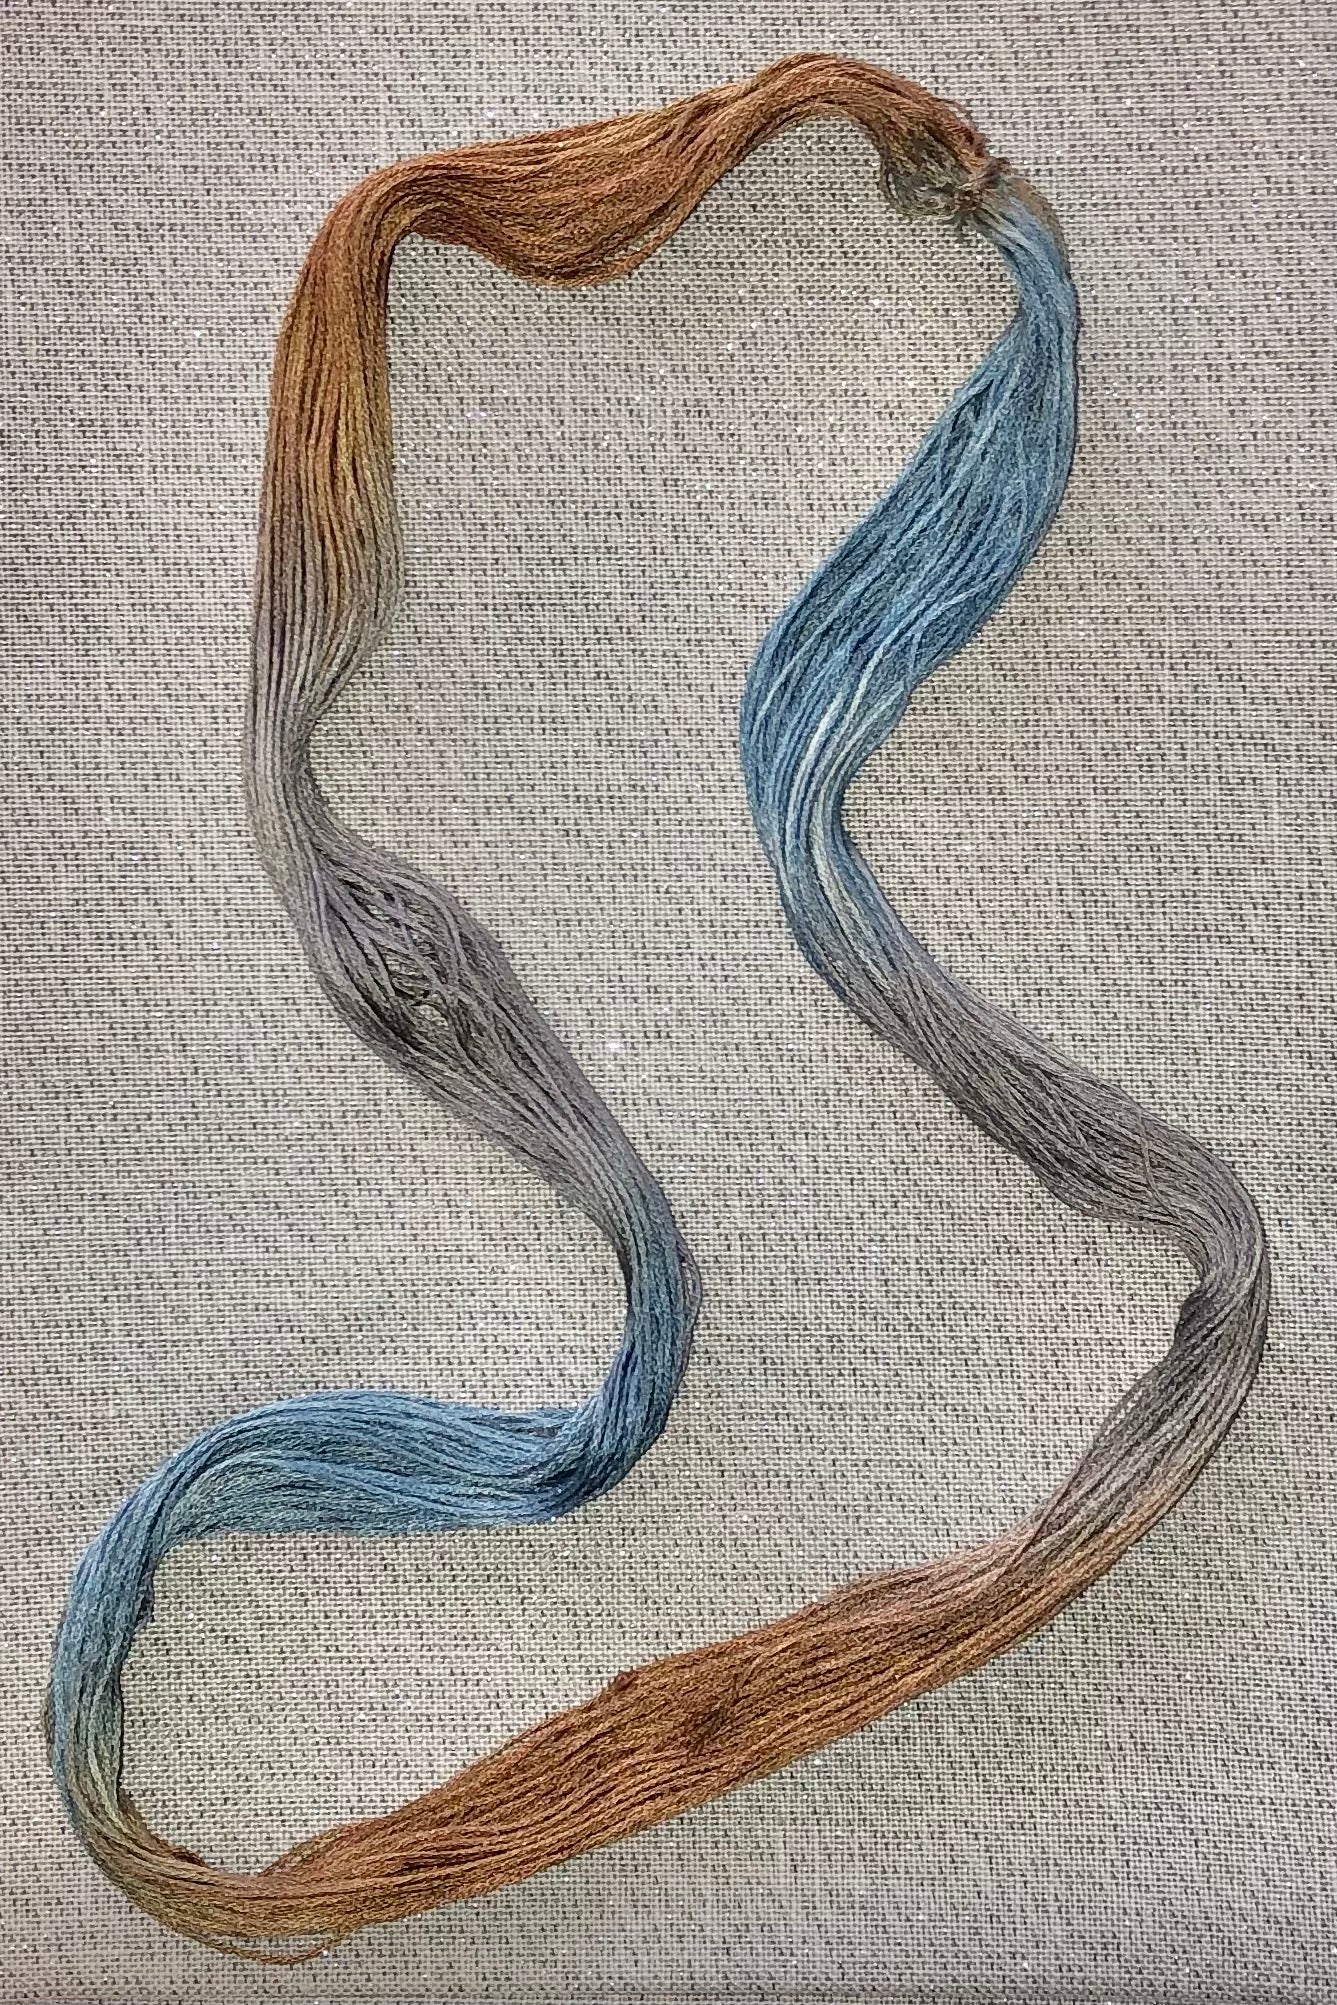 Silk hand dyed floss - Desert Landscape - Dyeing for Cross Stitch